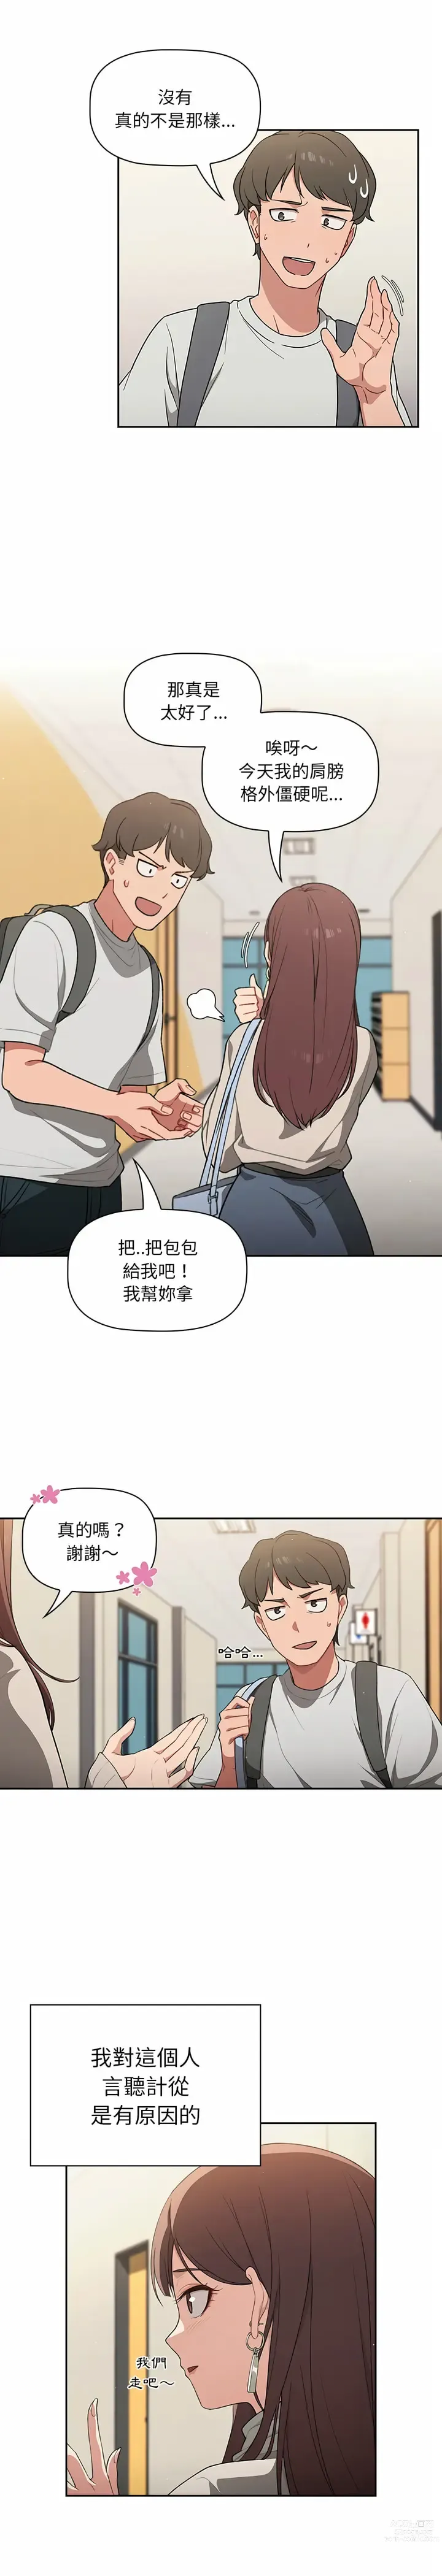 Page 8 of manga 調教開關 1-56 第一季 END